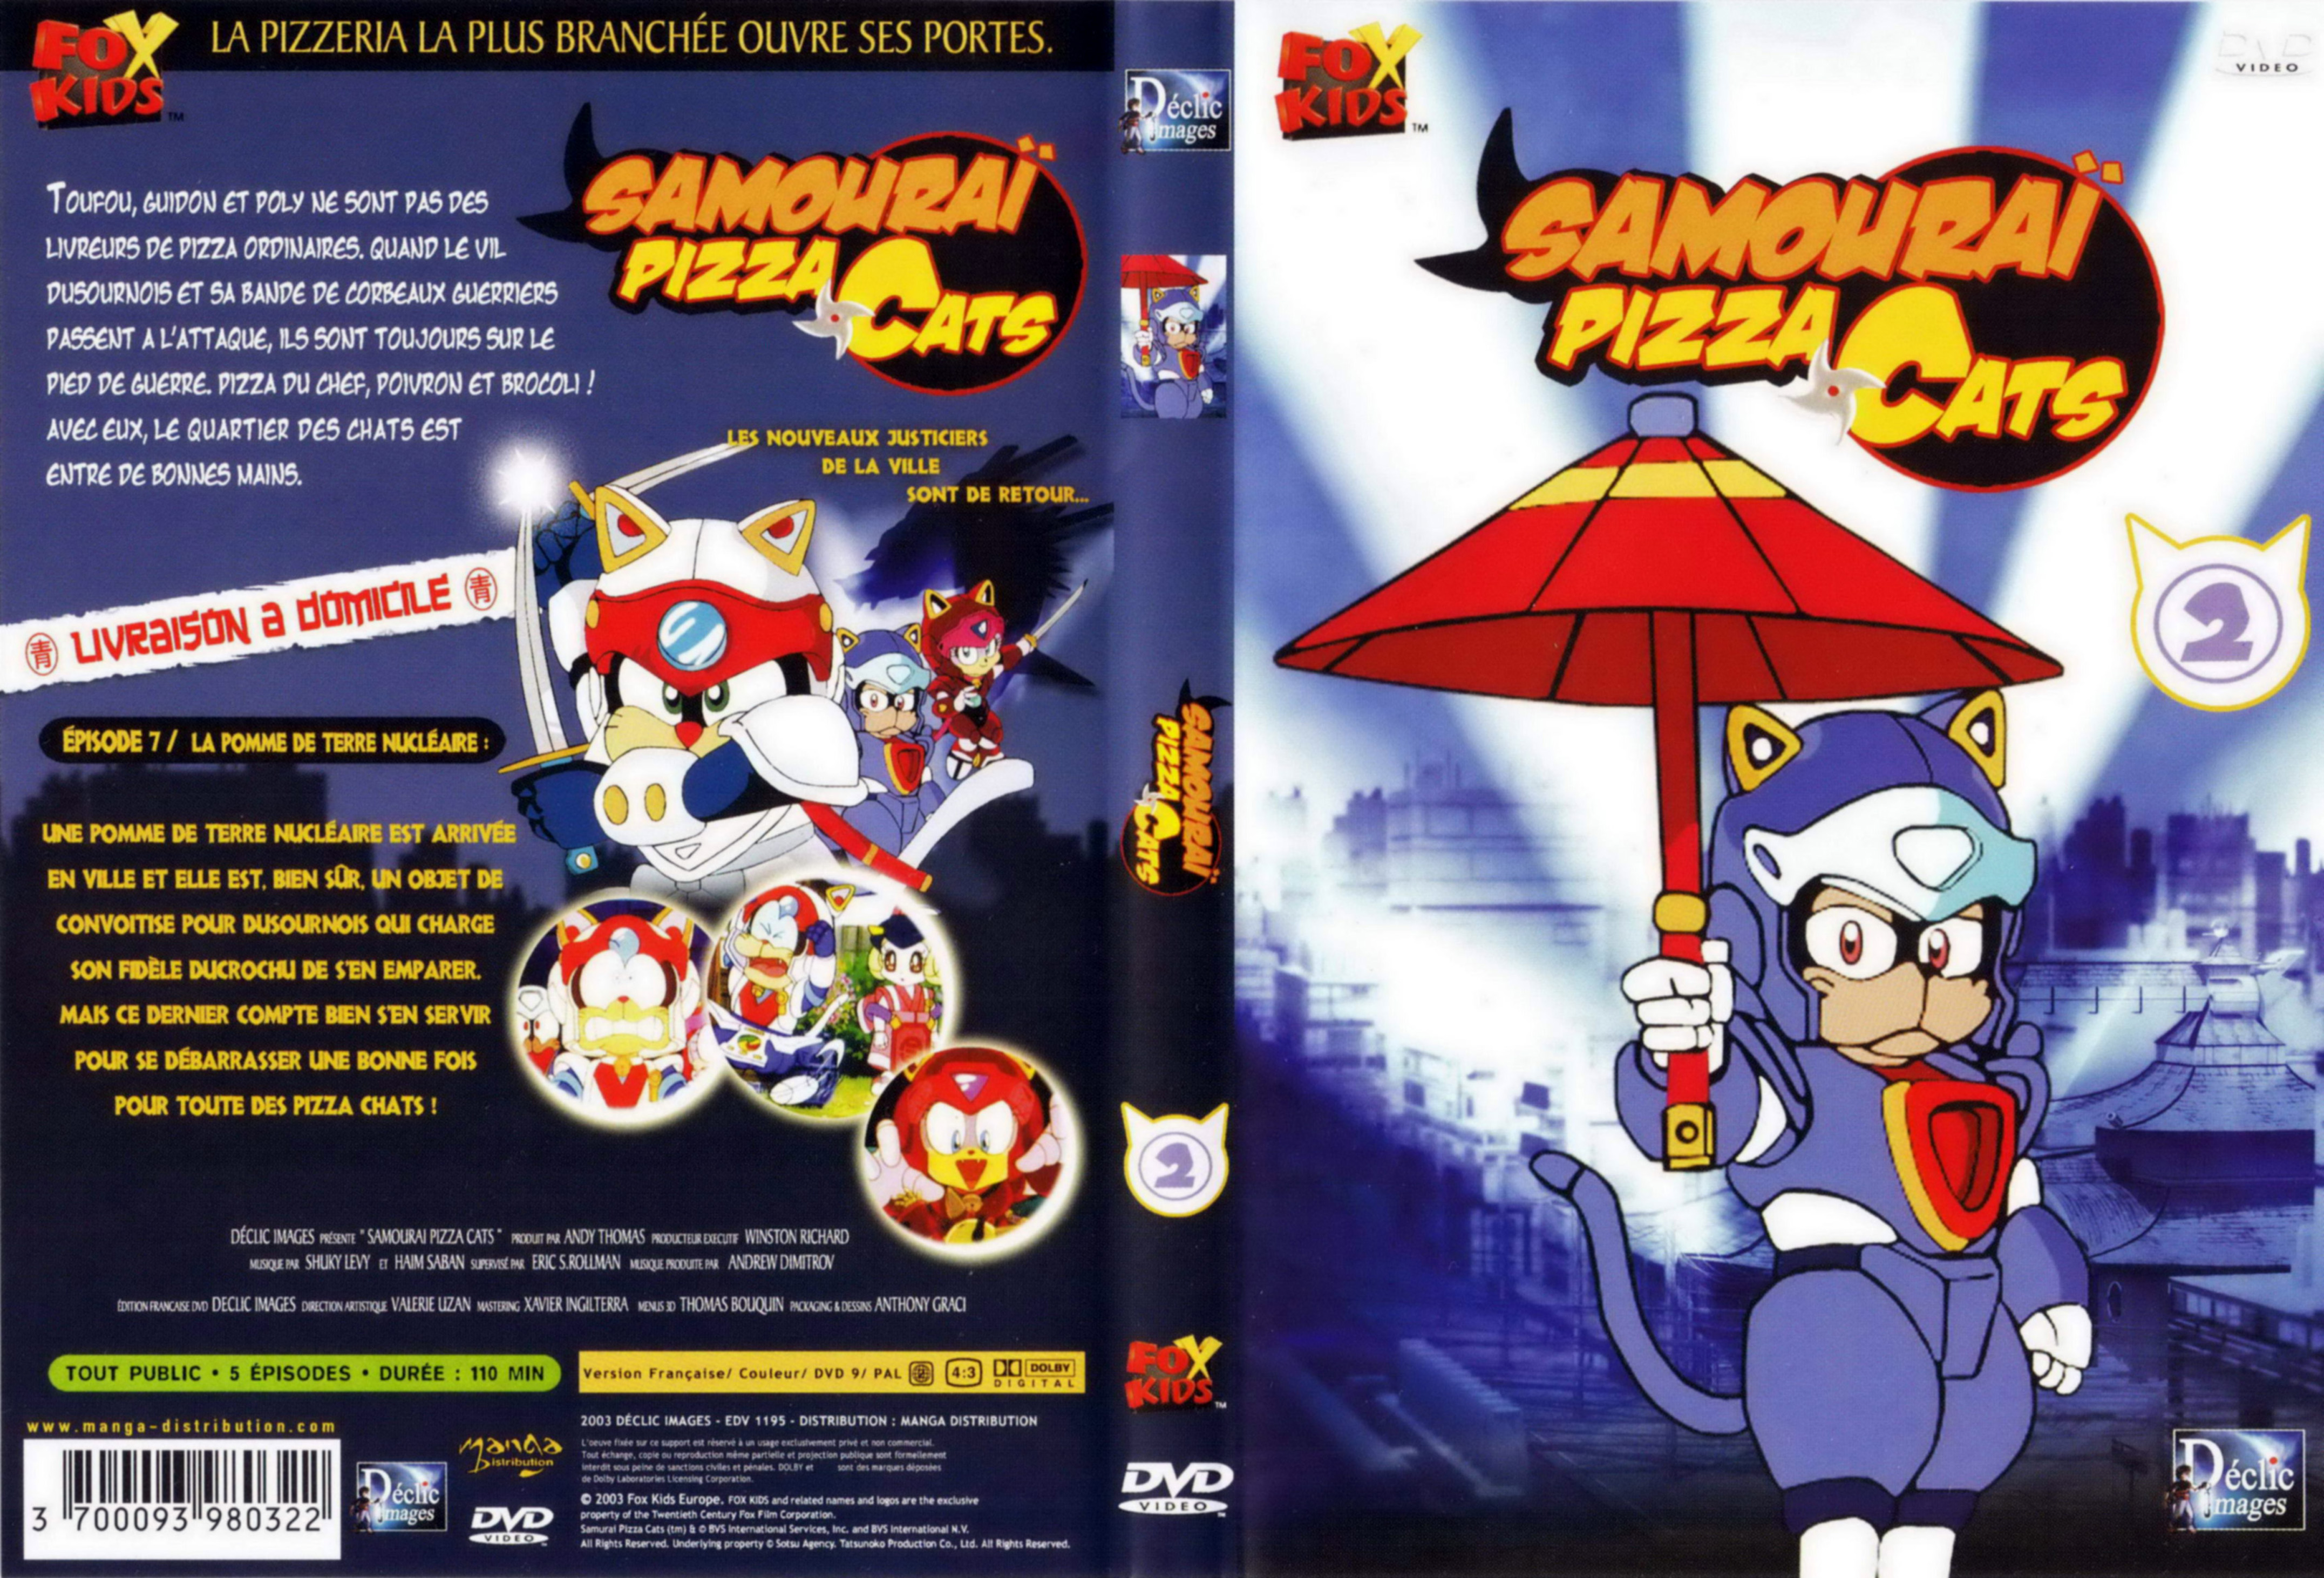 Jaquette DVD Samourai pizza cats dvd 2